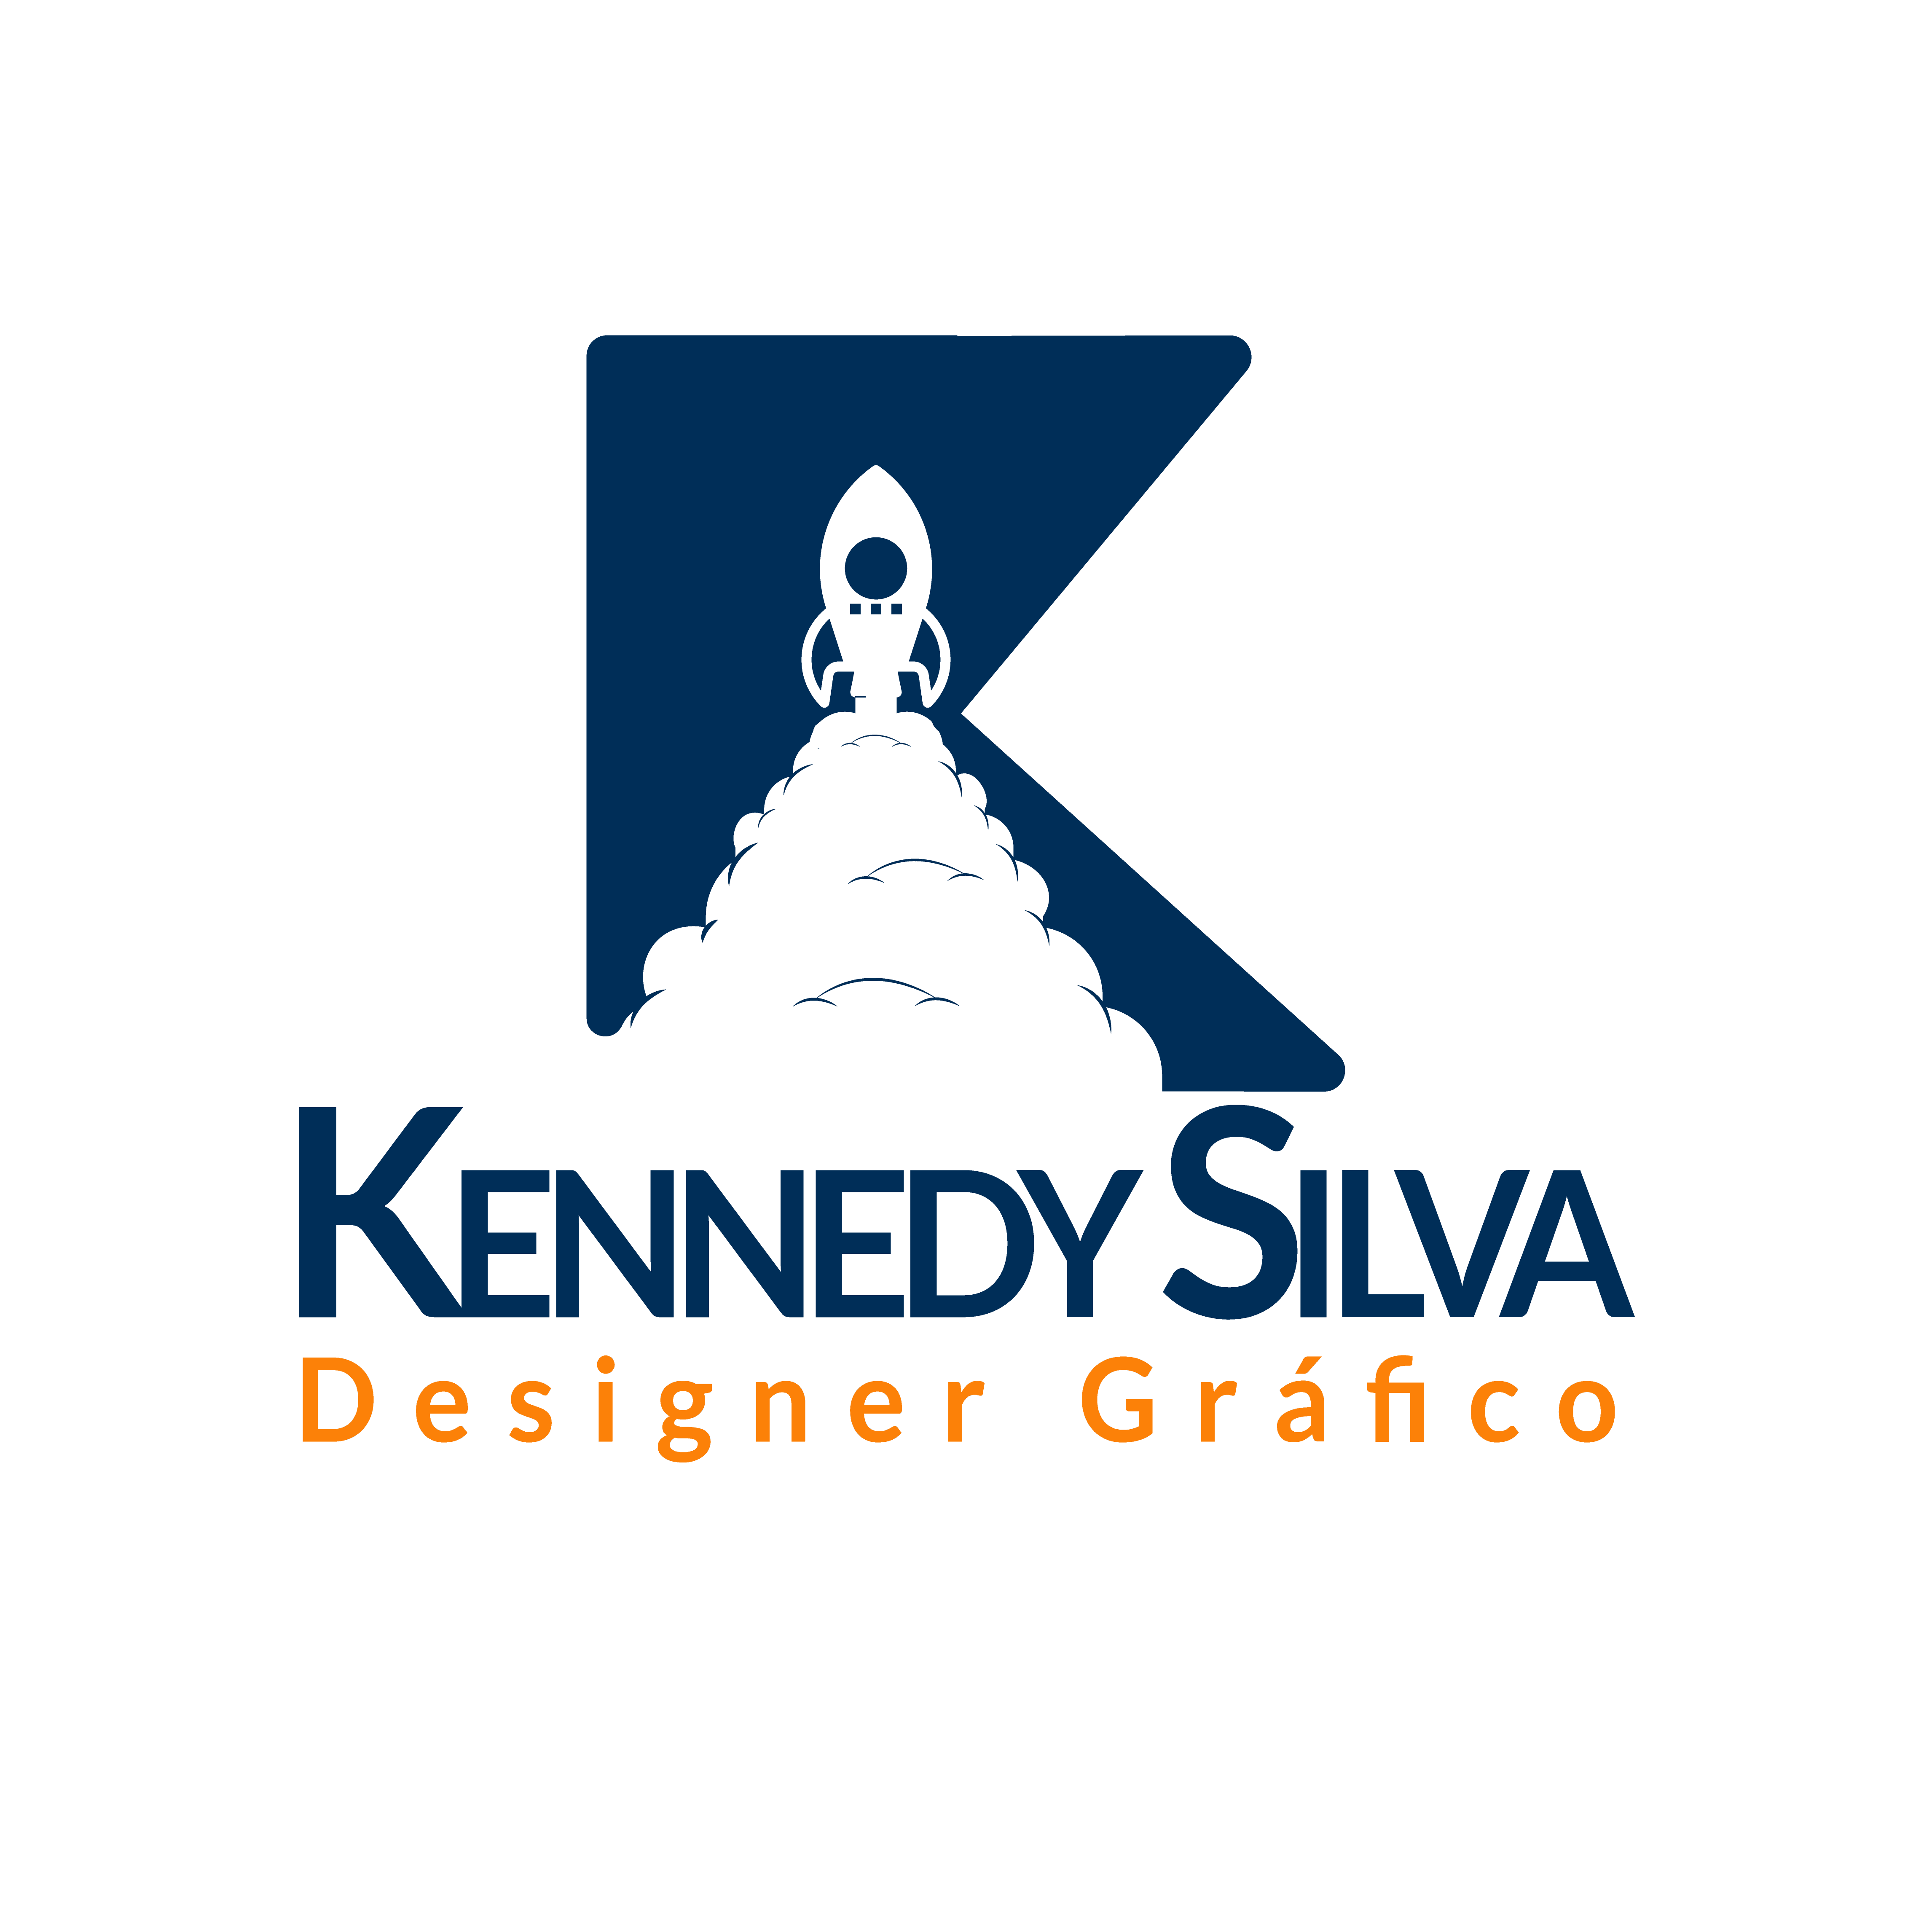 Kennedy Silva Design Gráfico